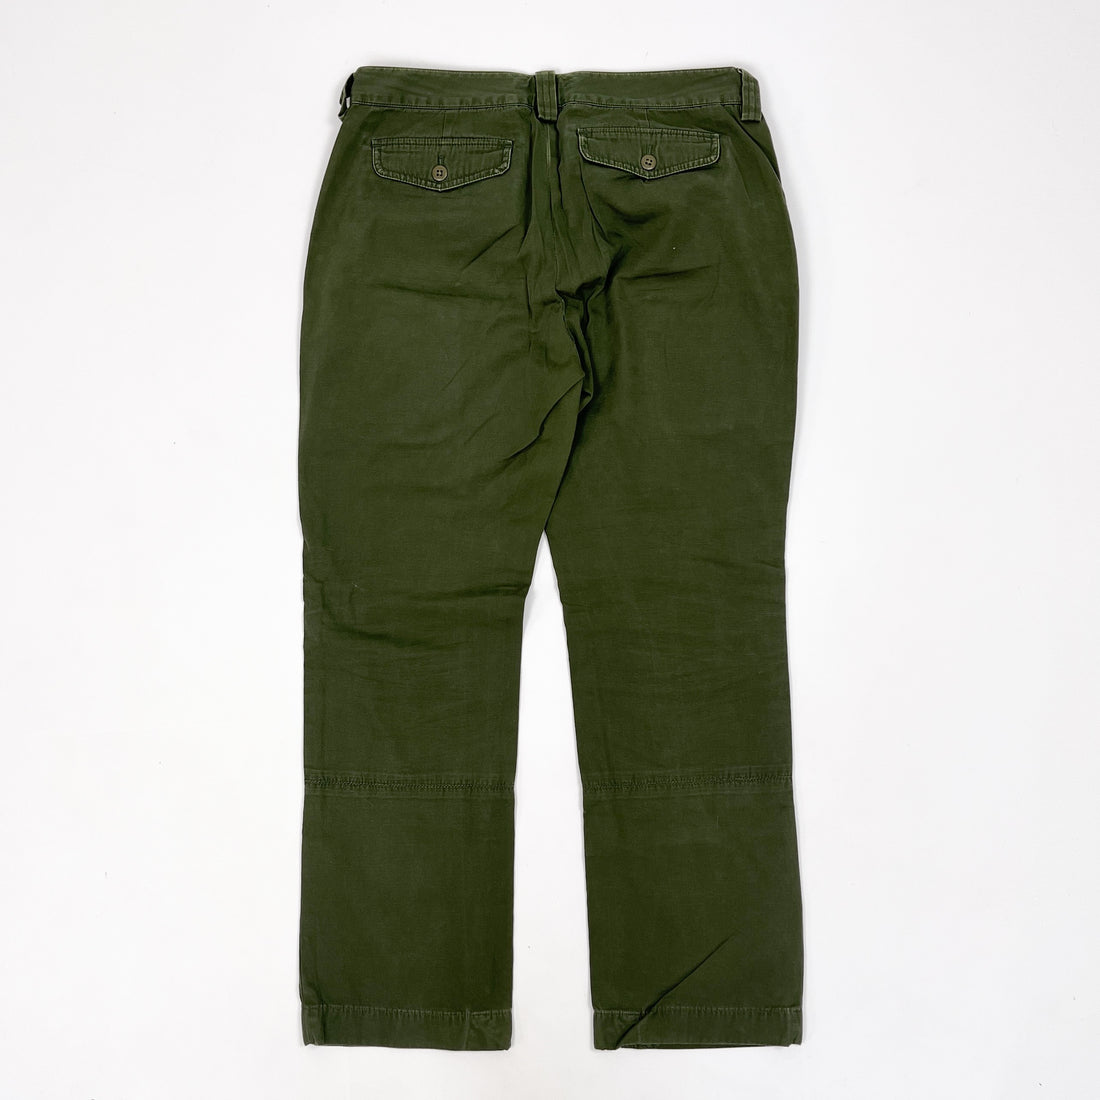 90s Polo Ralph Lauren Military Inspired Cargo Pants (34x30) – GerbThrifts